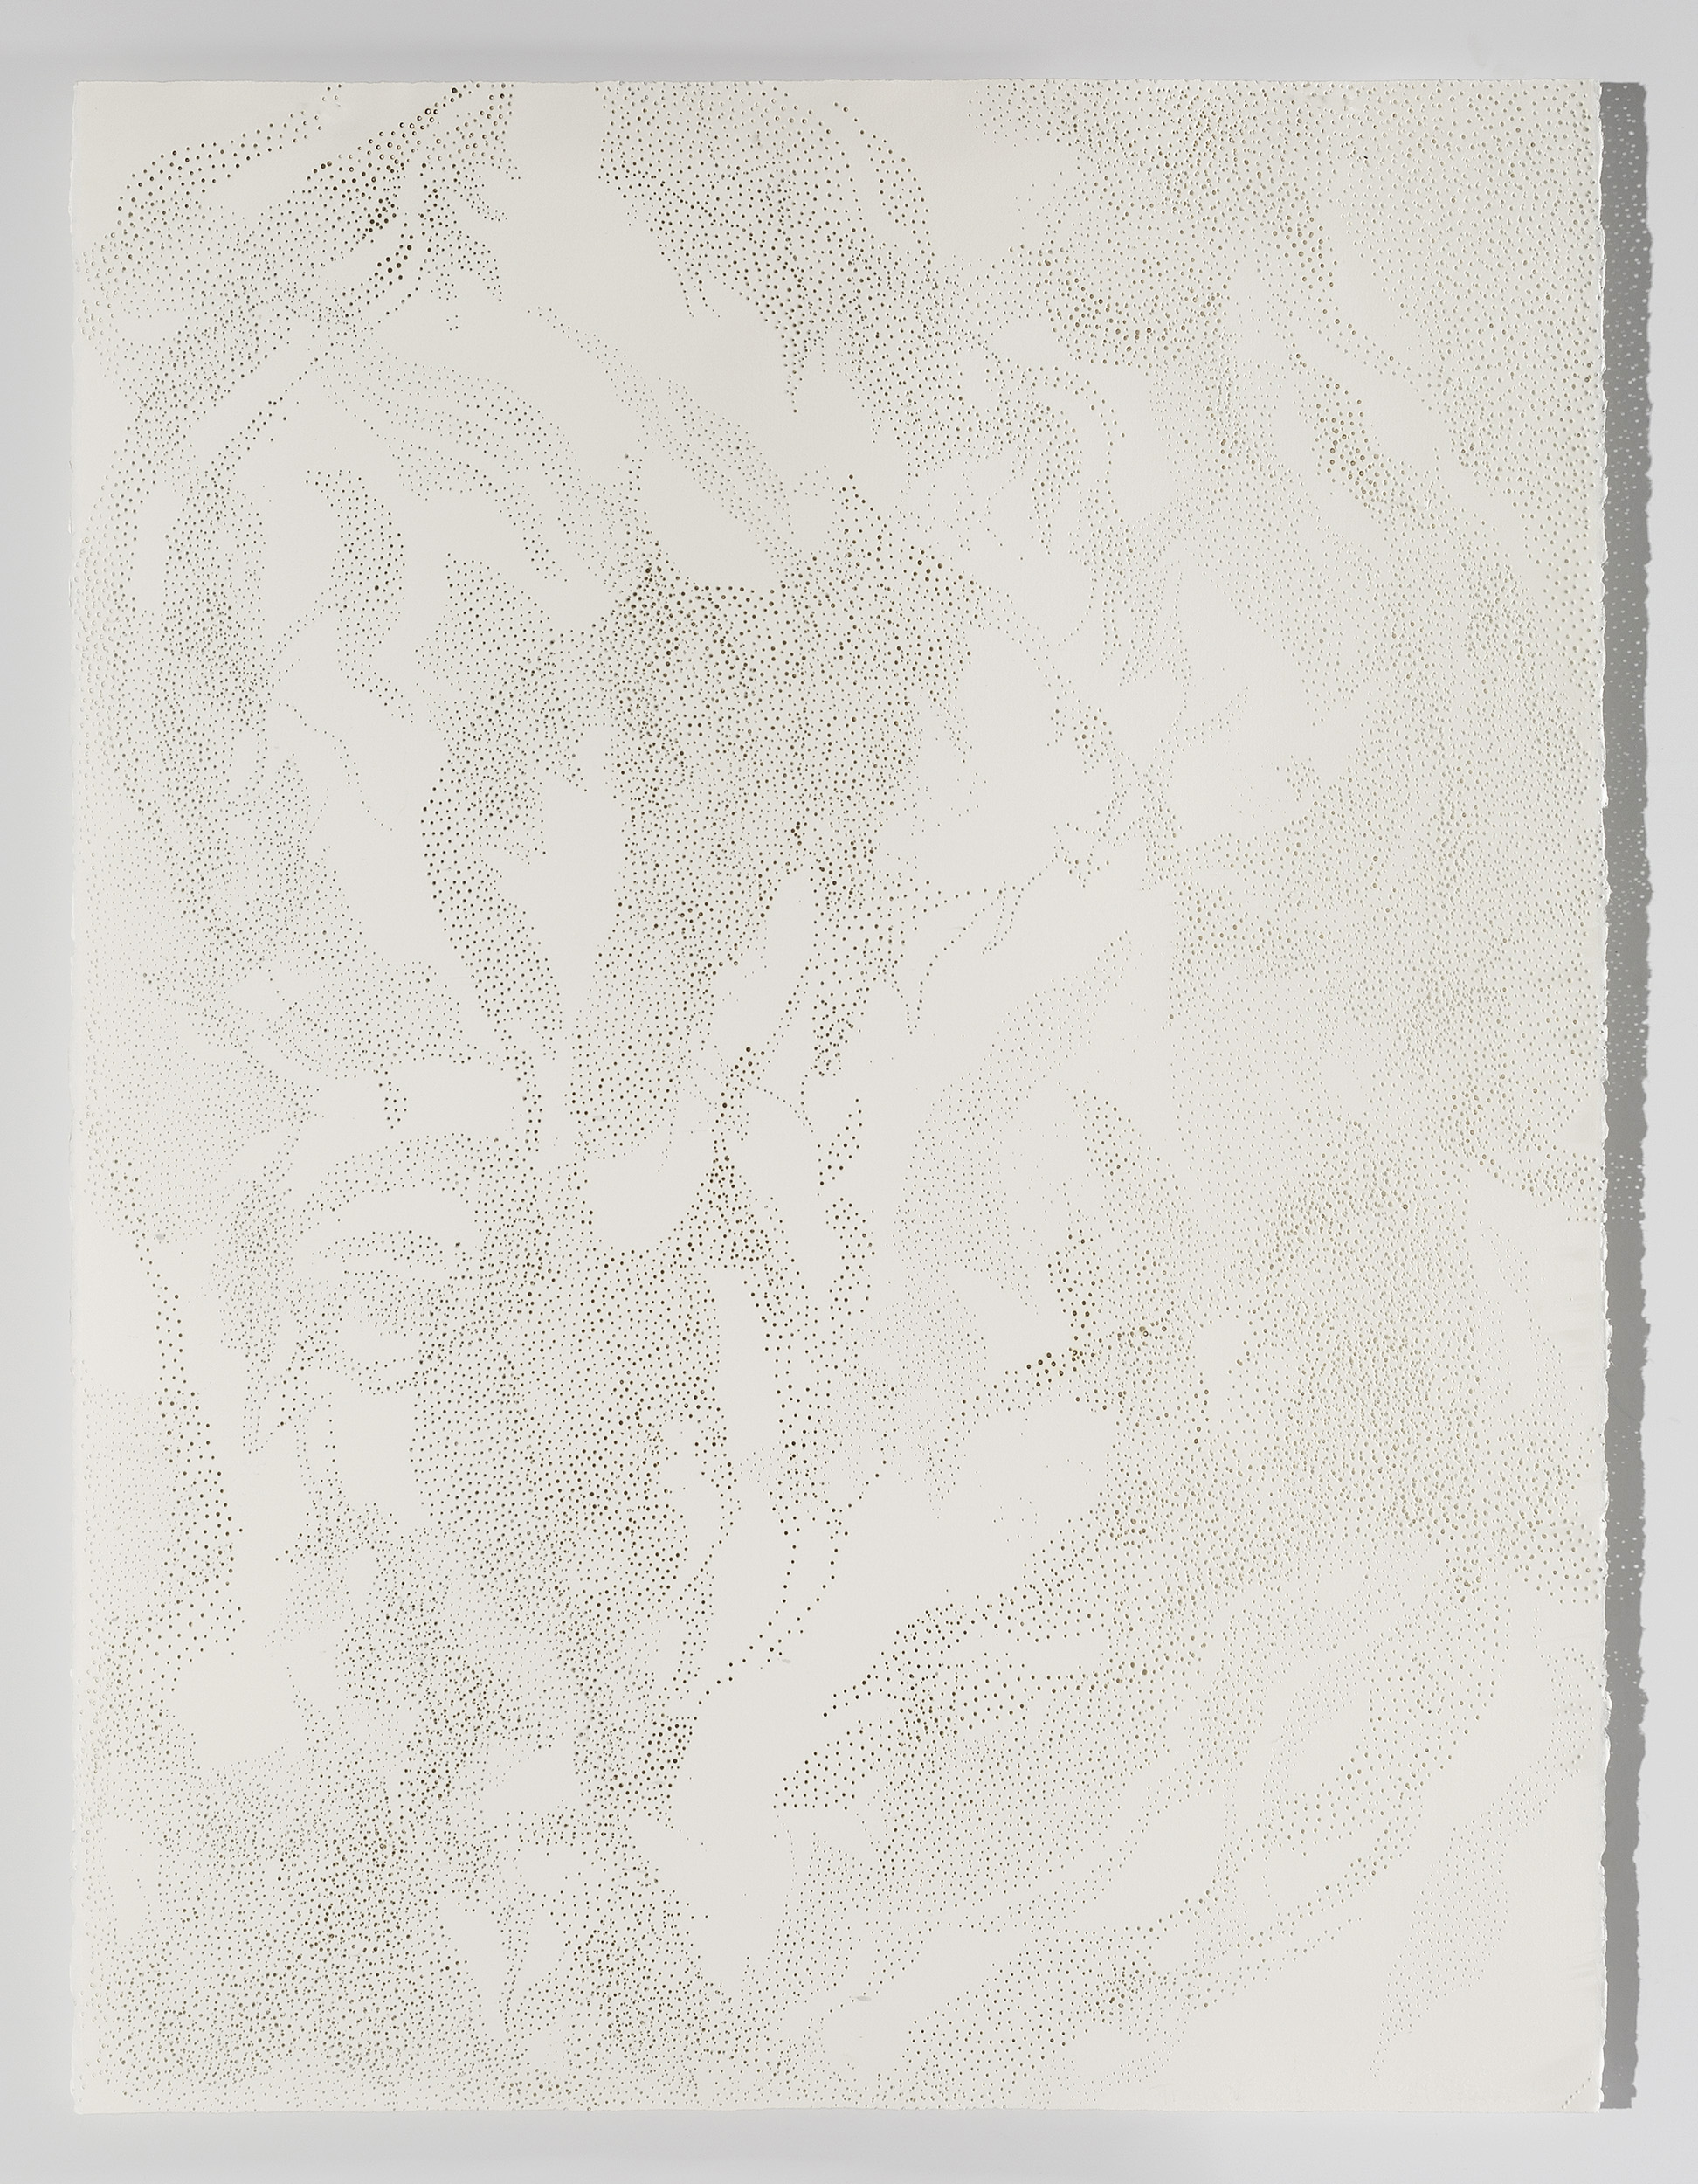 Melinda Schawel 'Traces V' perforated paper 76 x 57cm $3,800